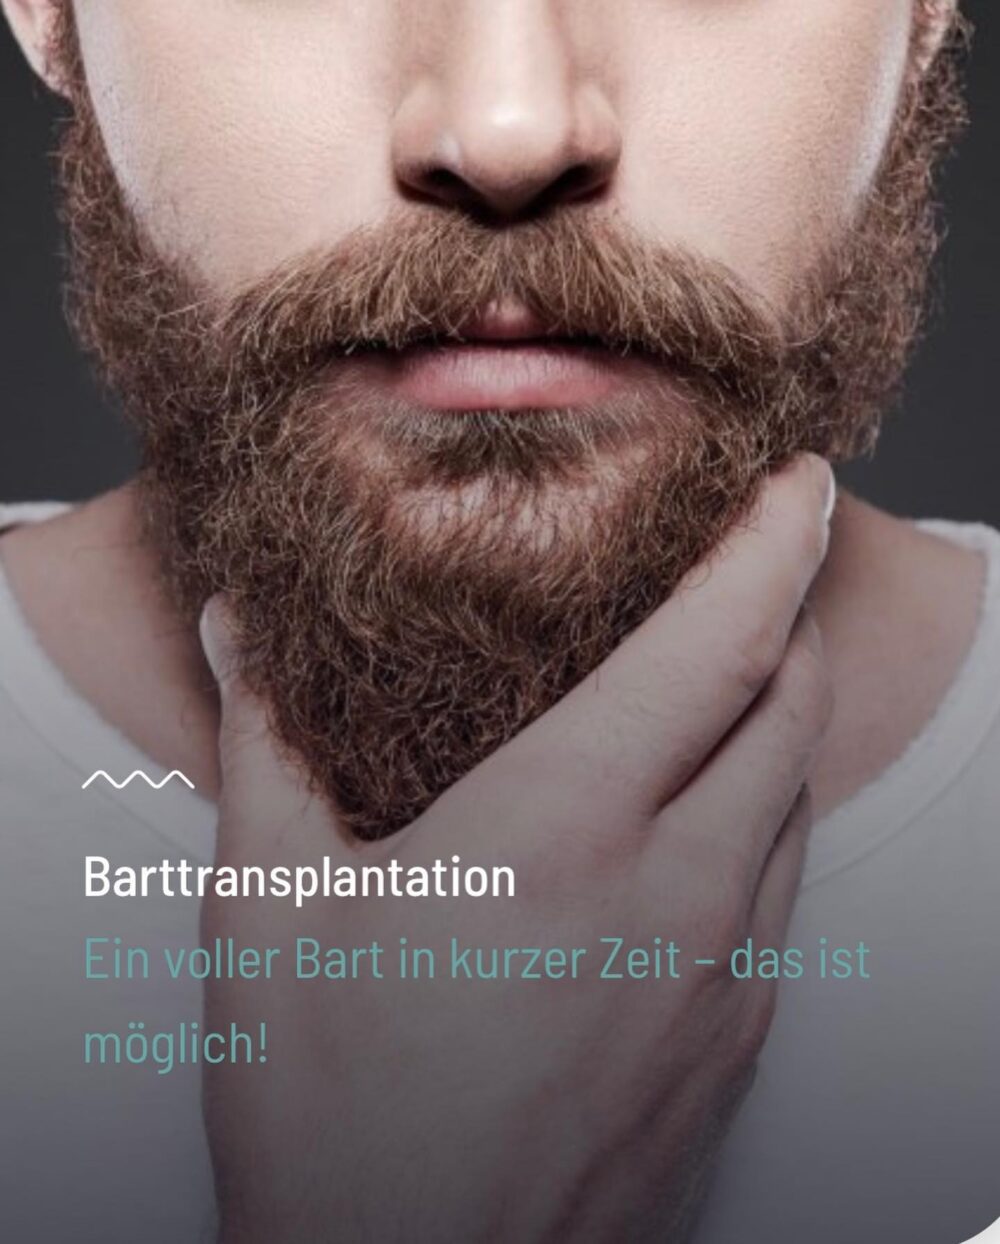 Barttransplantation